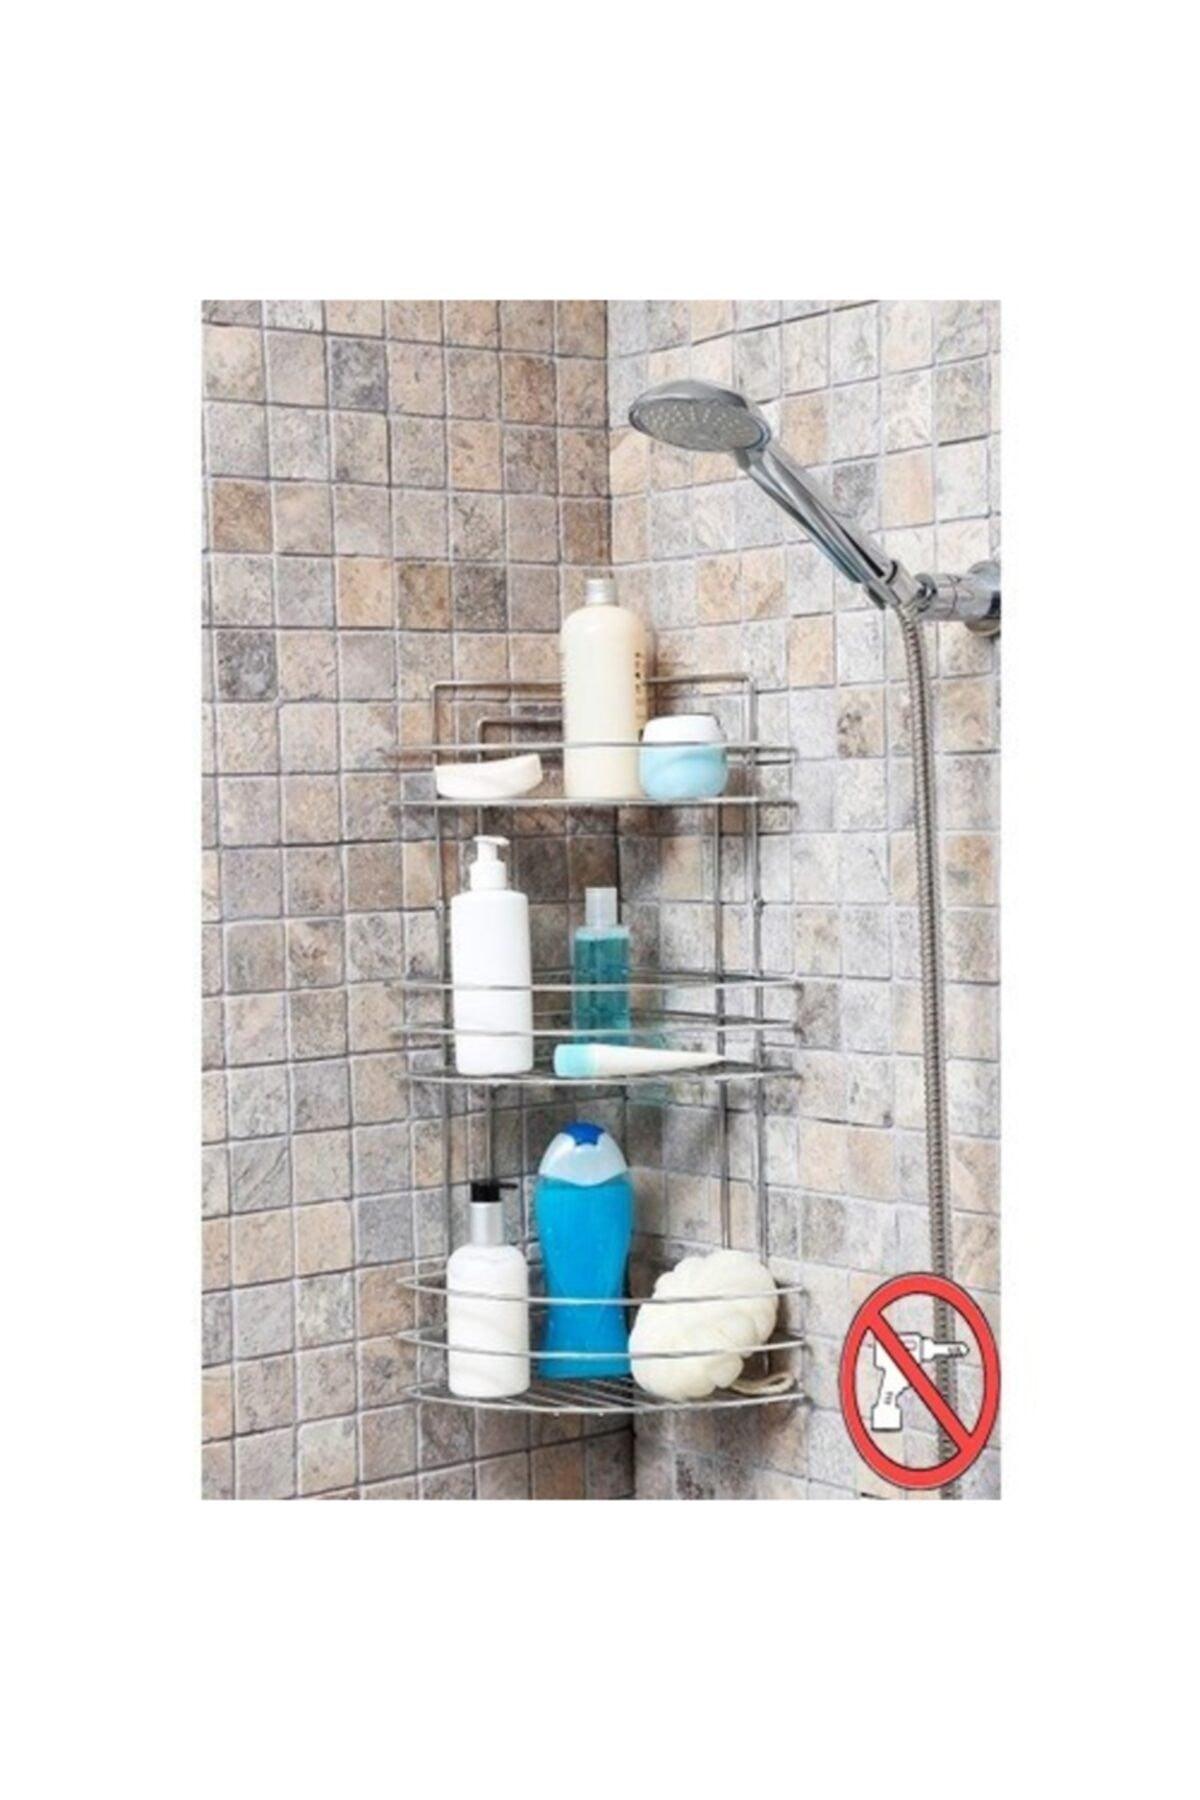 Stainless Wall Adhesive 3-Tier Bathroom Corner Shampoo Holder Bathroom Organizer Shelf Chrome Tk-03 - Swordslife